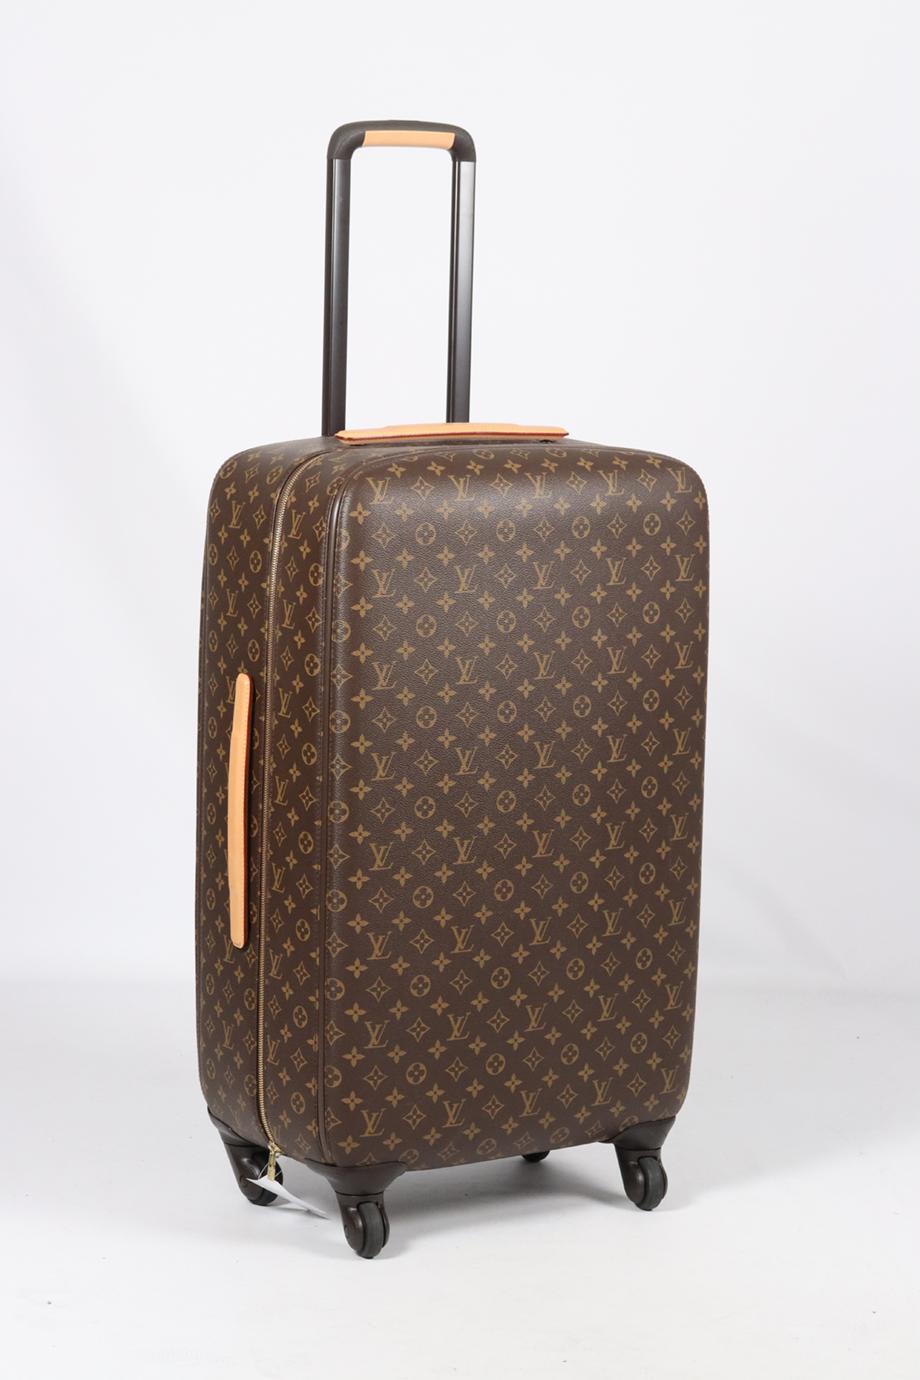 <ul>
<li>Louis Vuitton Zephyr 70 Monogram Coated Canvas And Leather Suitcase.</li>
<li>Brown.</li>
<li>Zip fastening - Top.</li>
<li>Comes with - dustbag and box.</li>
<li><strong>Height: 26.2 in.</strong></li>
<li><strong>Width: 17.1